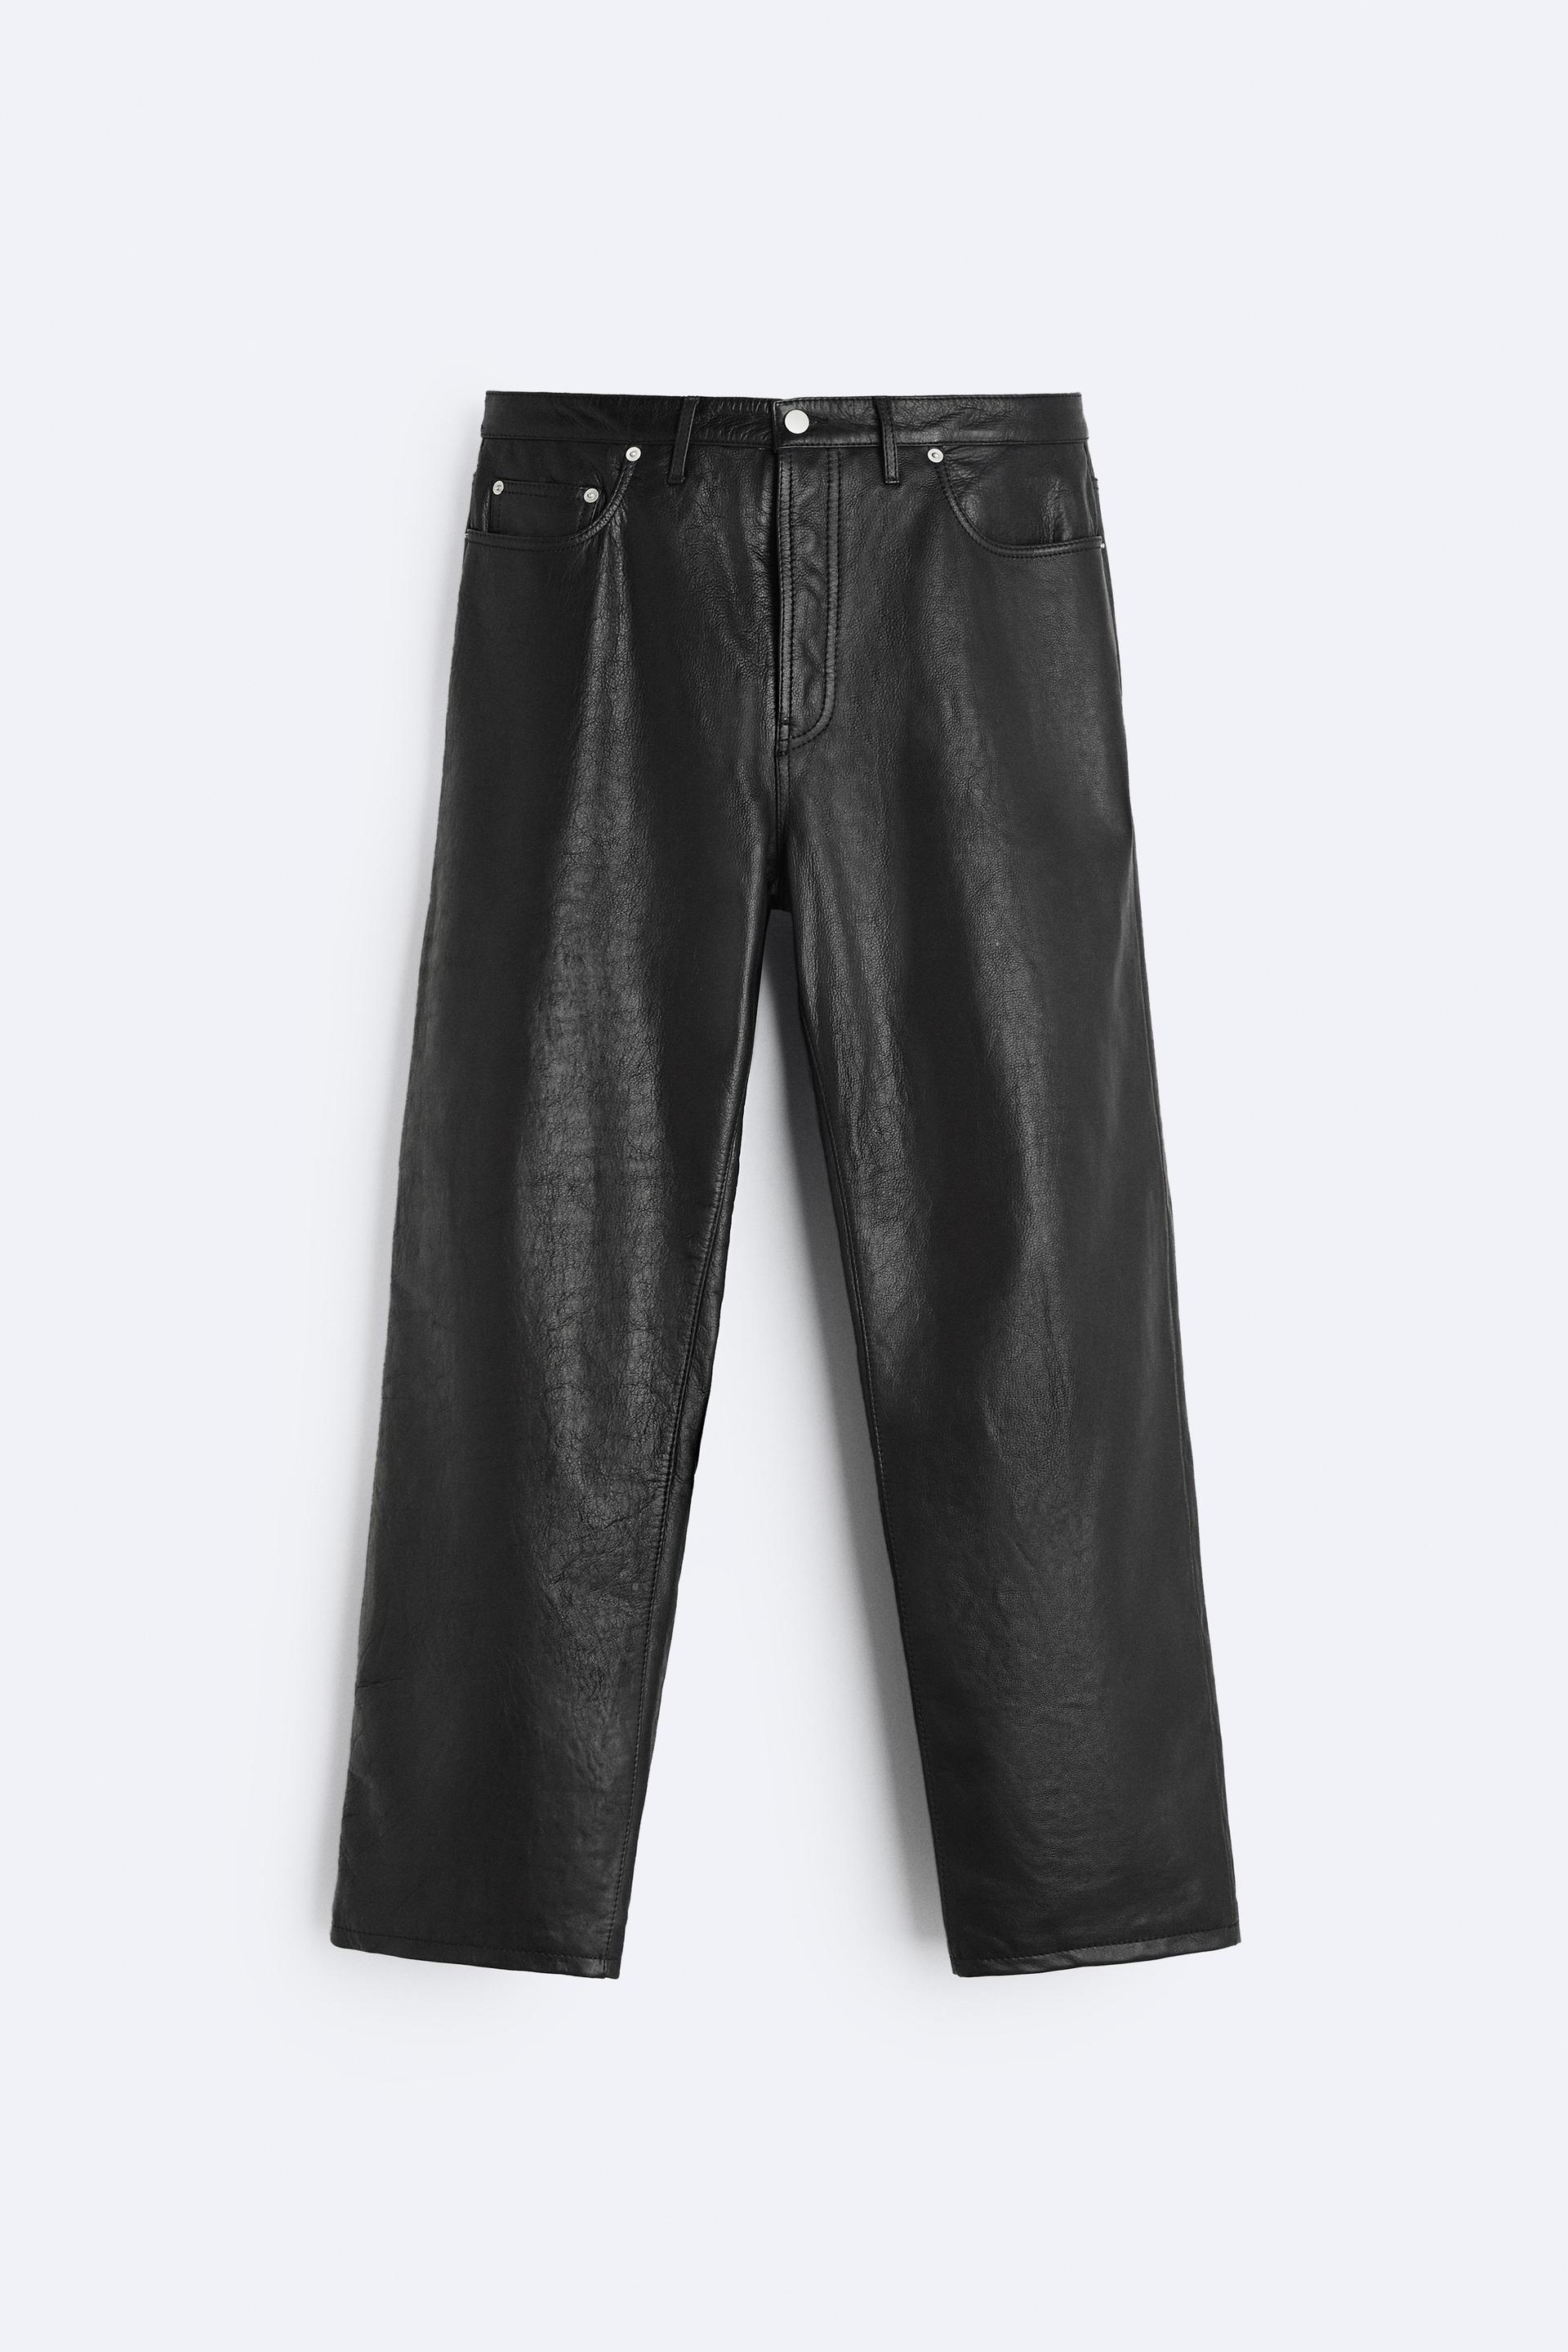 ZARA Leather Leather Pants